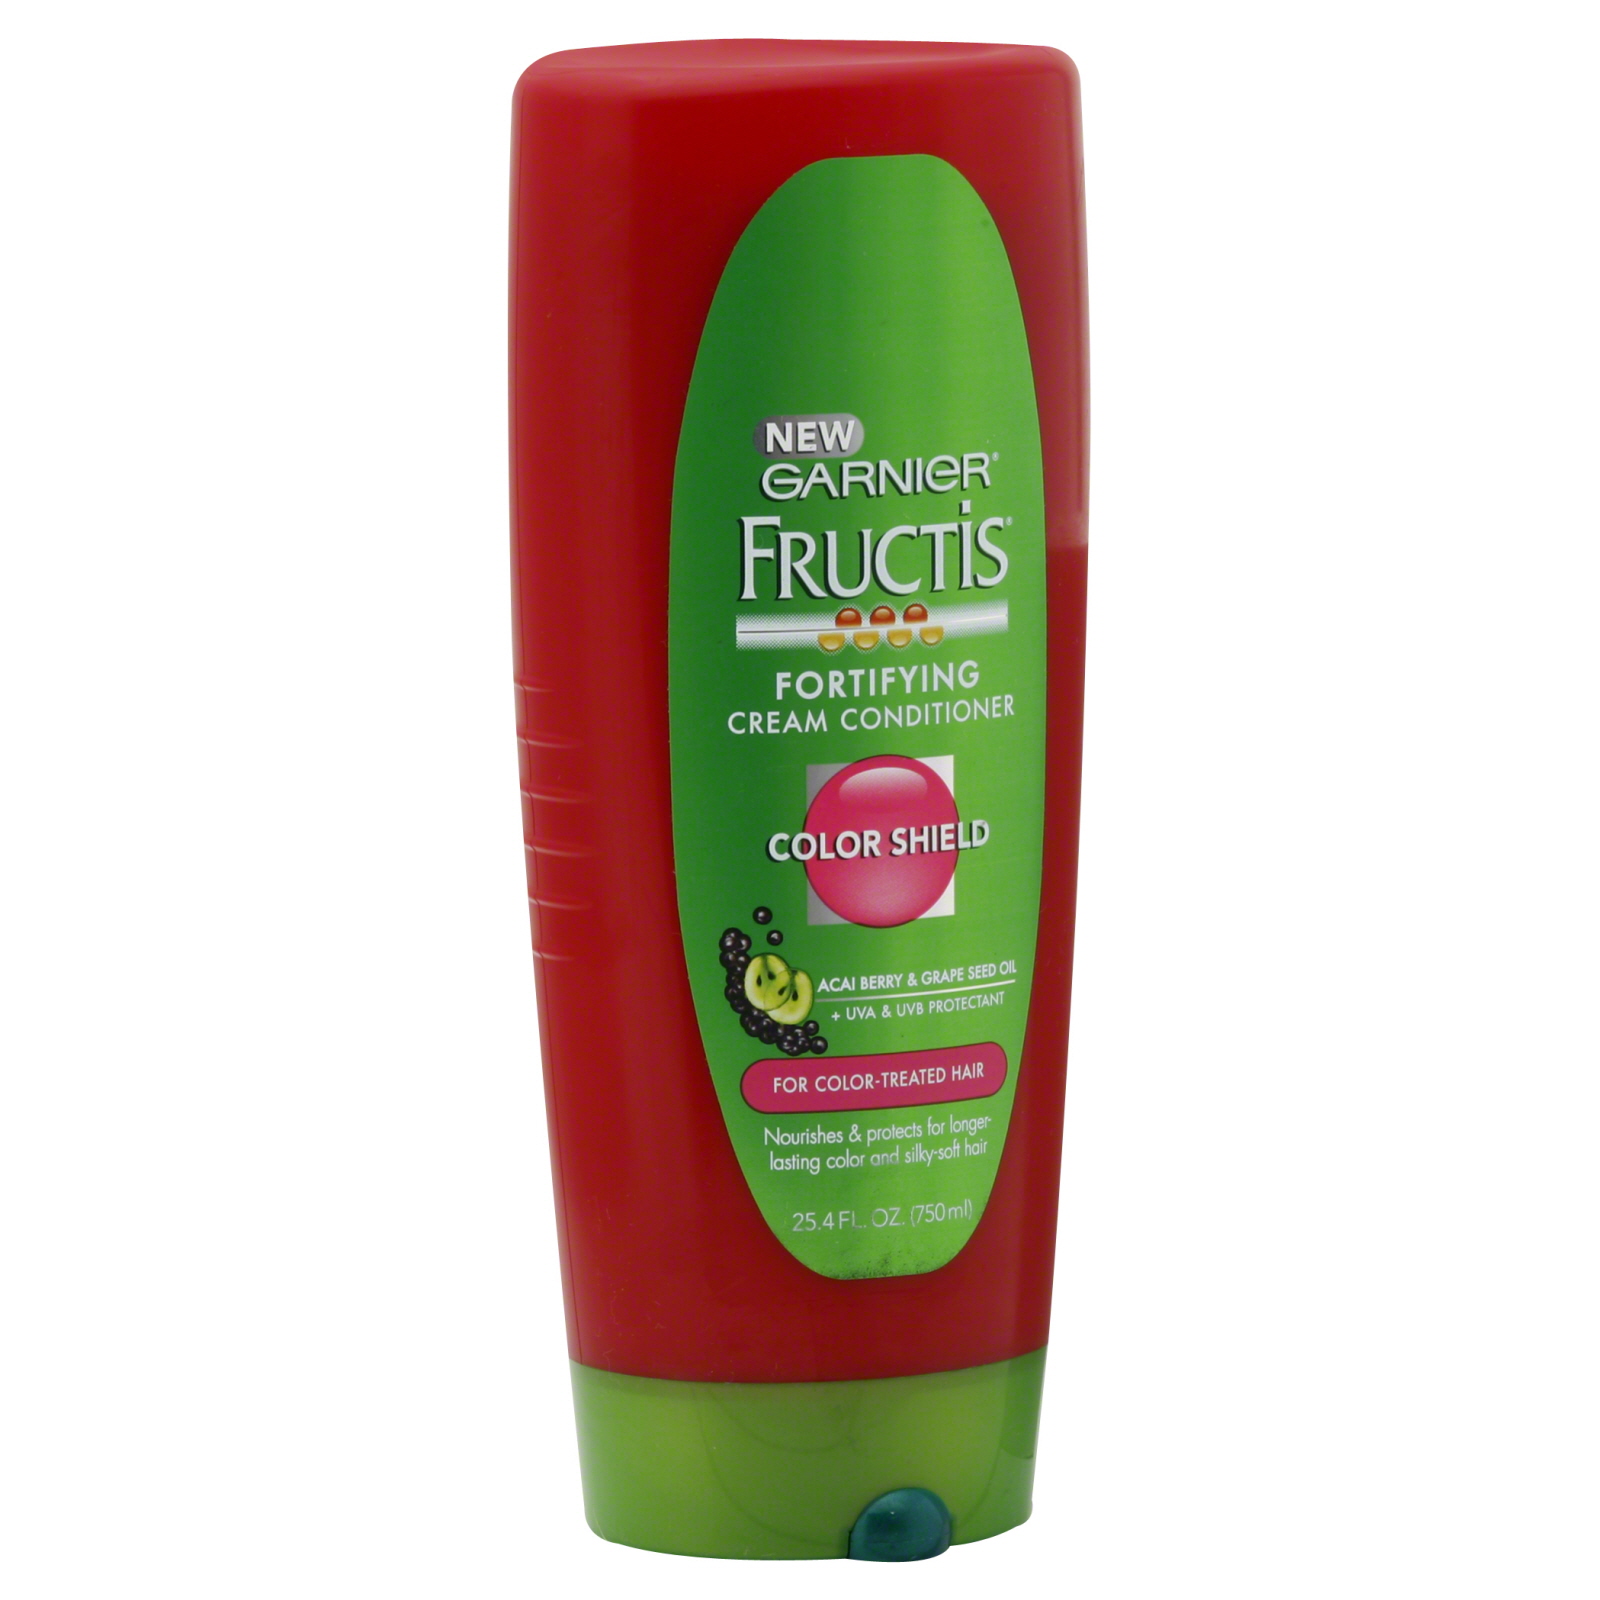 Garnier Fructis Fortifying Cream Conditioner, Color Shield, 25.4 fl oz (750 ml)